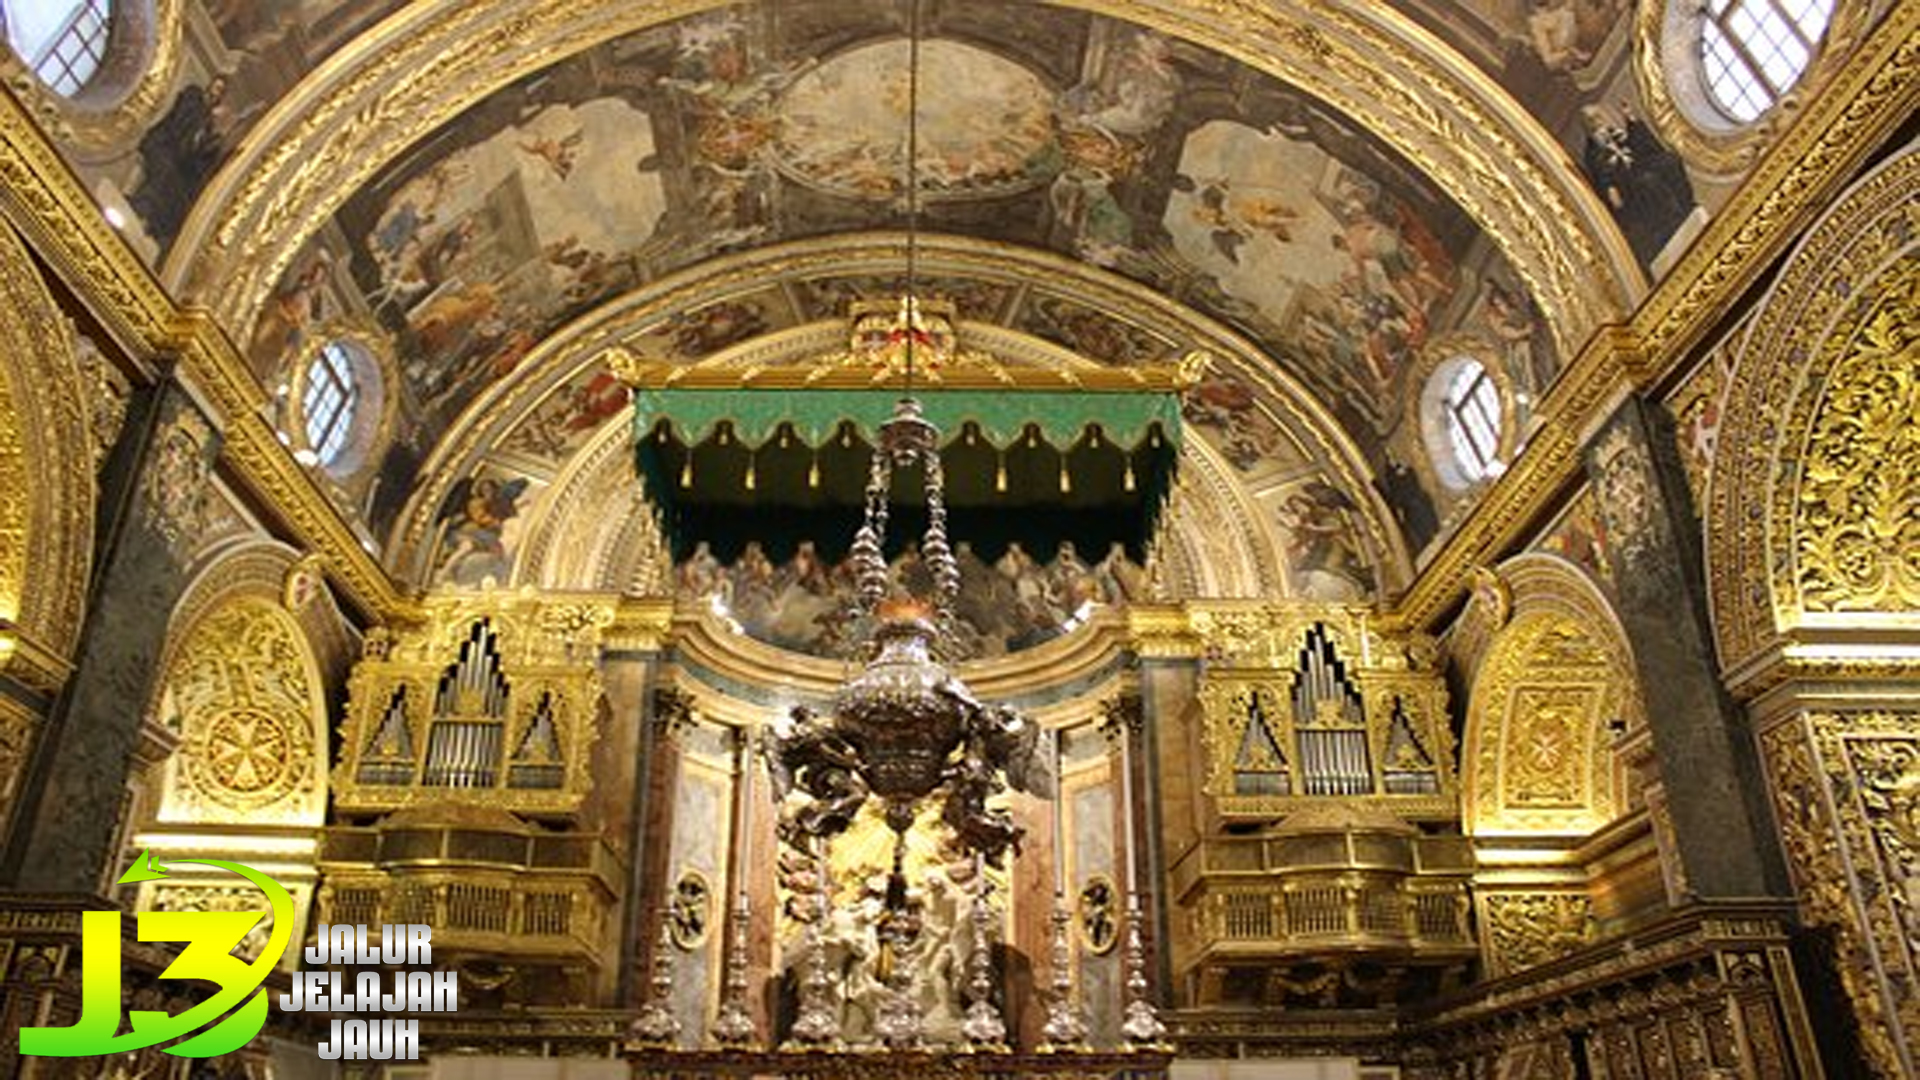 Keindahan Arsitektur Baroque di Katedral St. John, Valletta